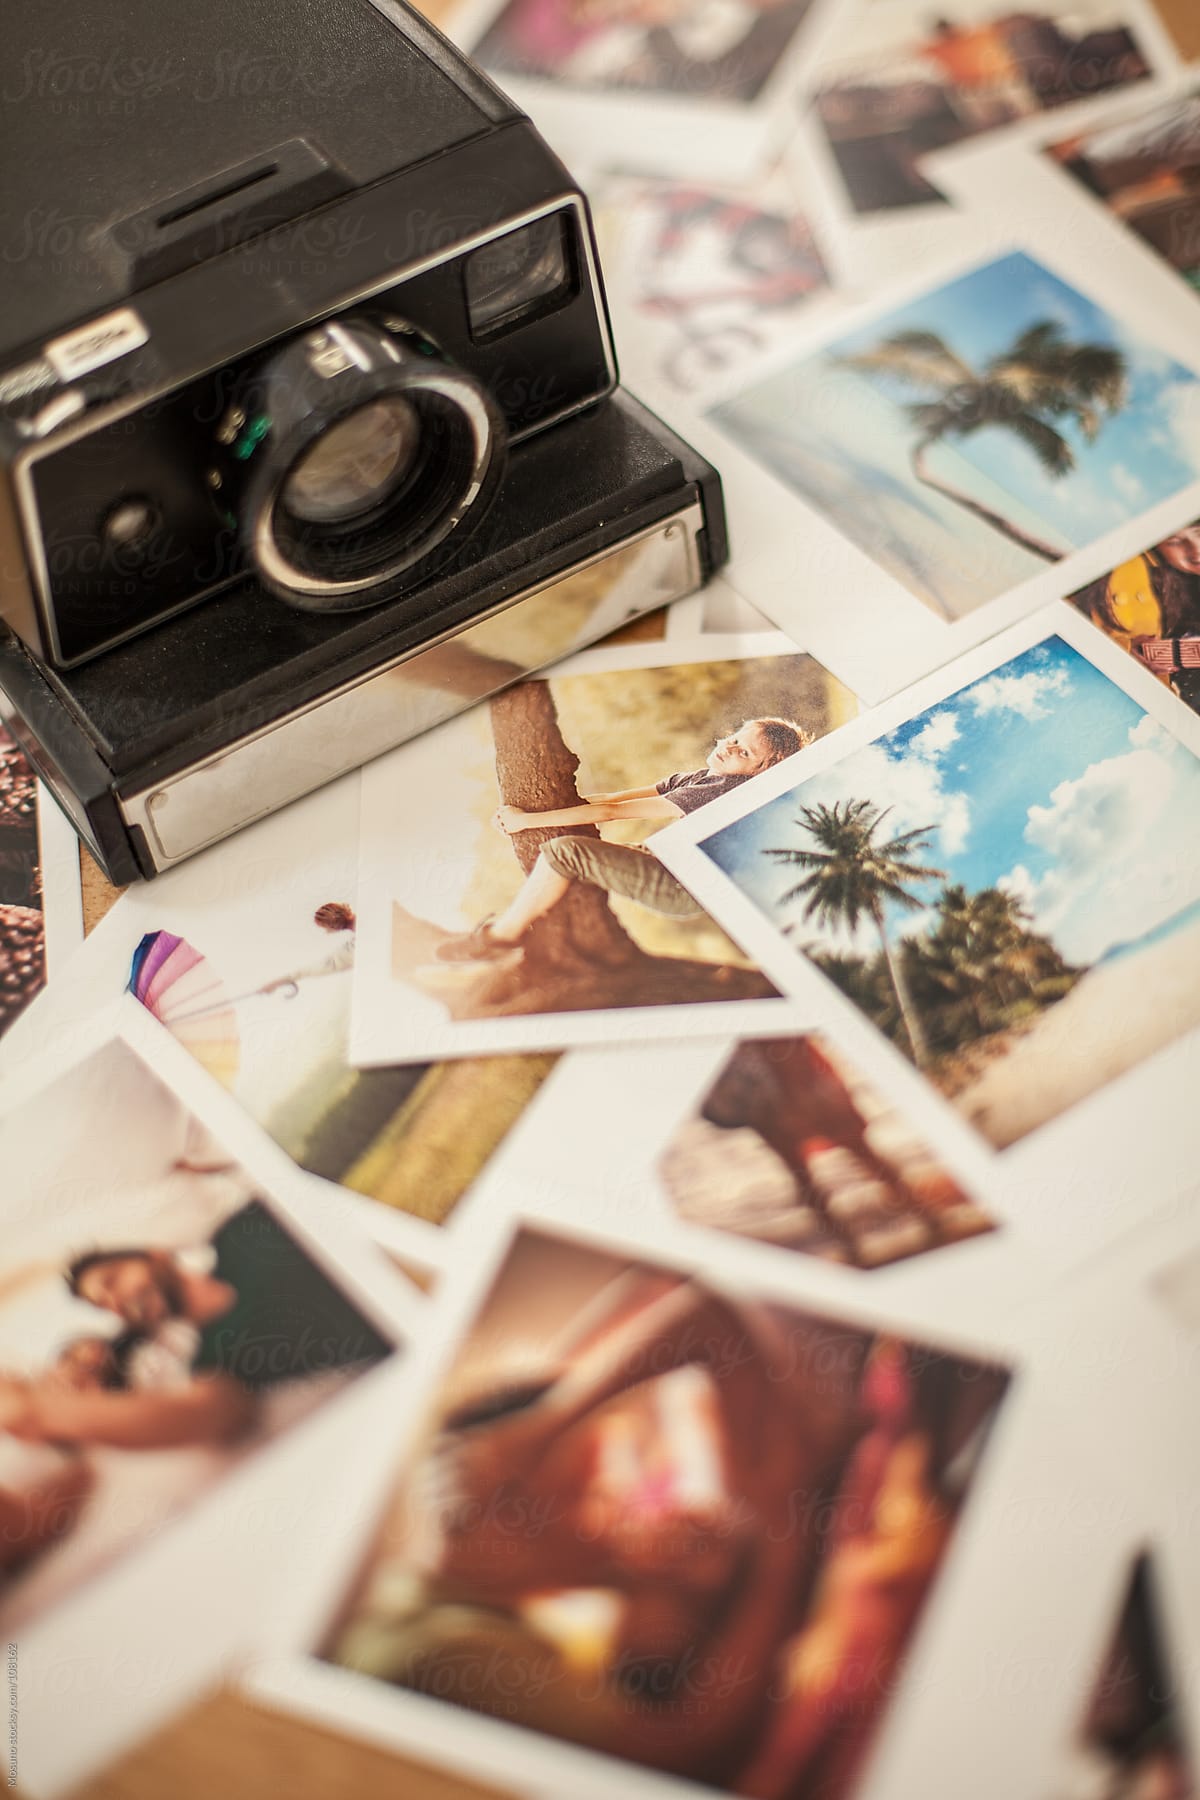 Polaroid Camera and Photos on the Table